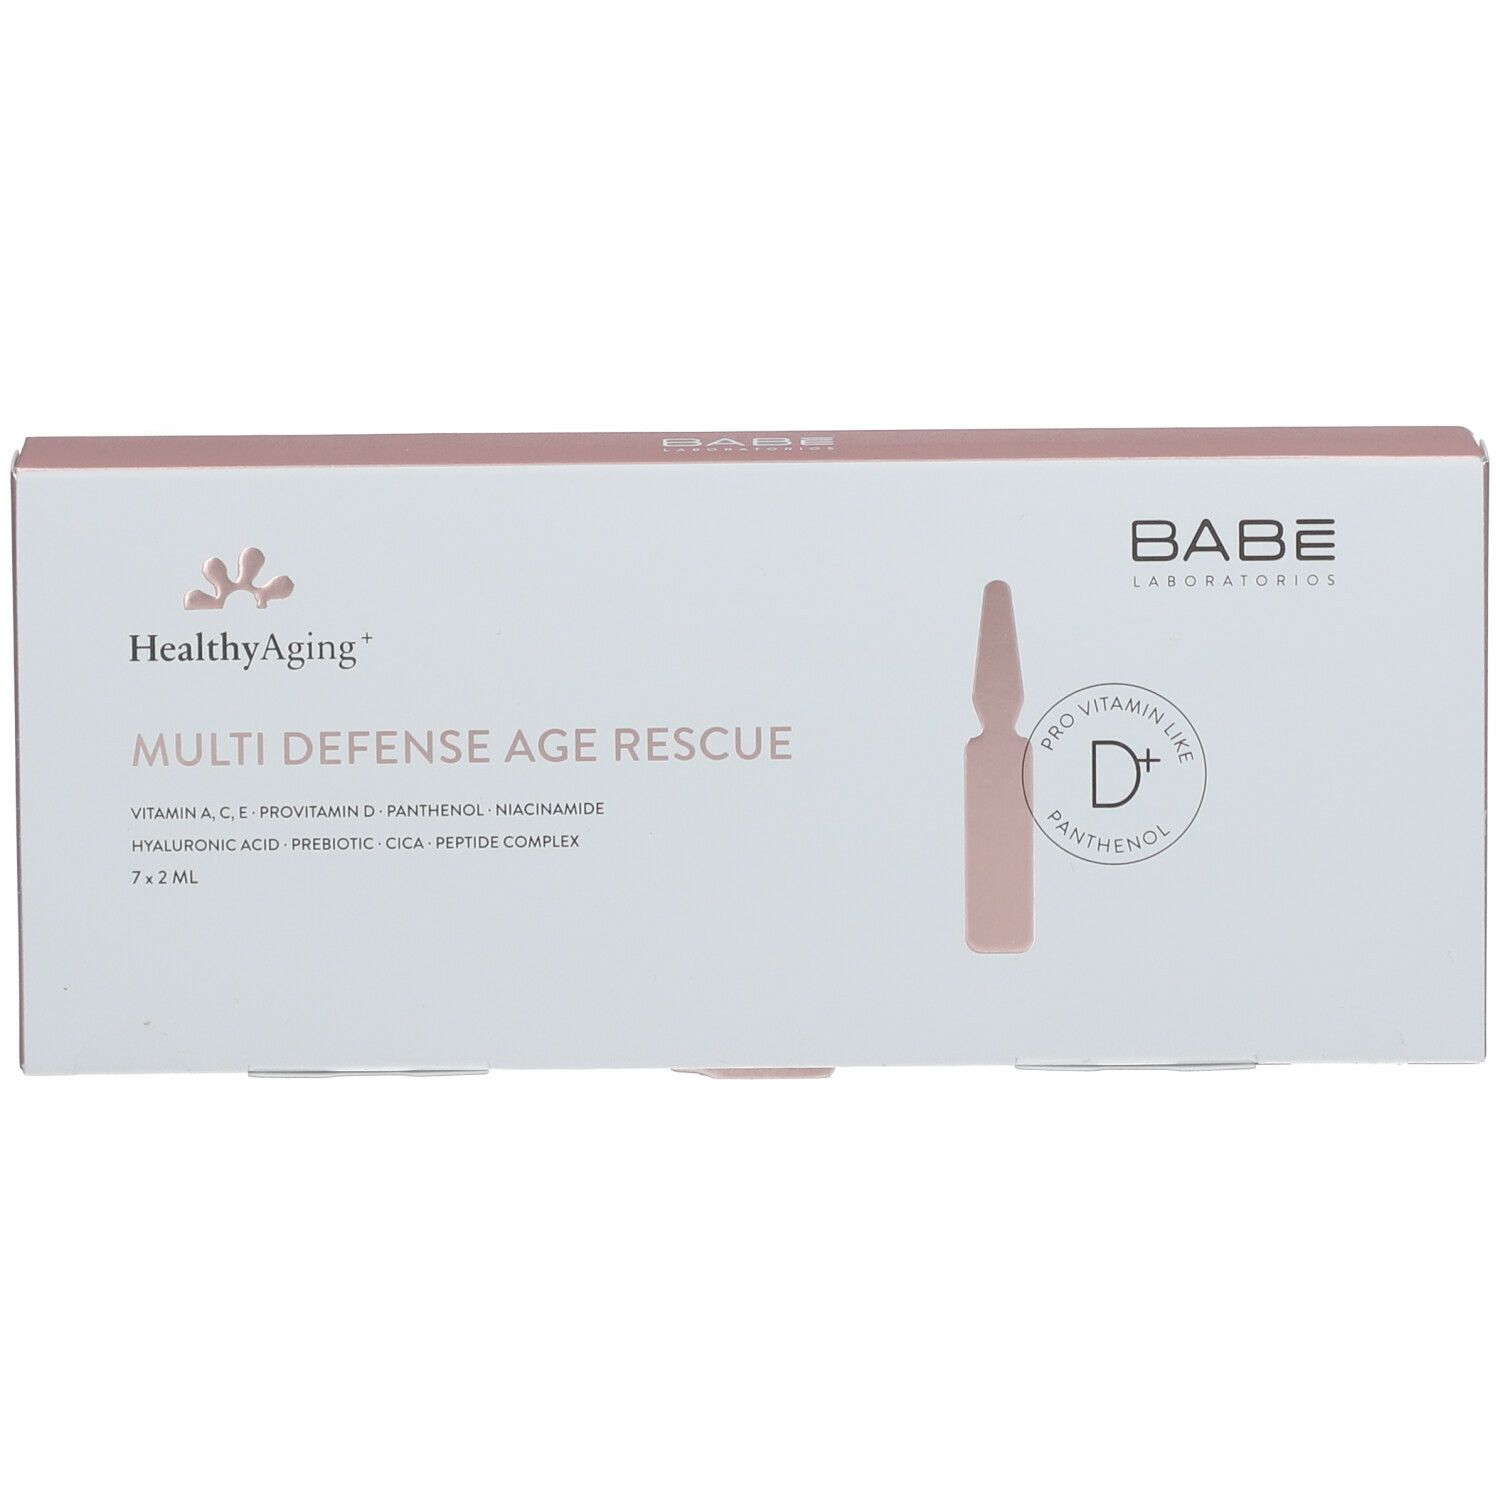 Babé HealthyAging+ Multi Defense Age Rescue